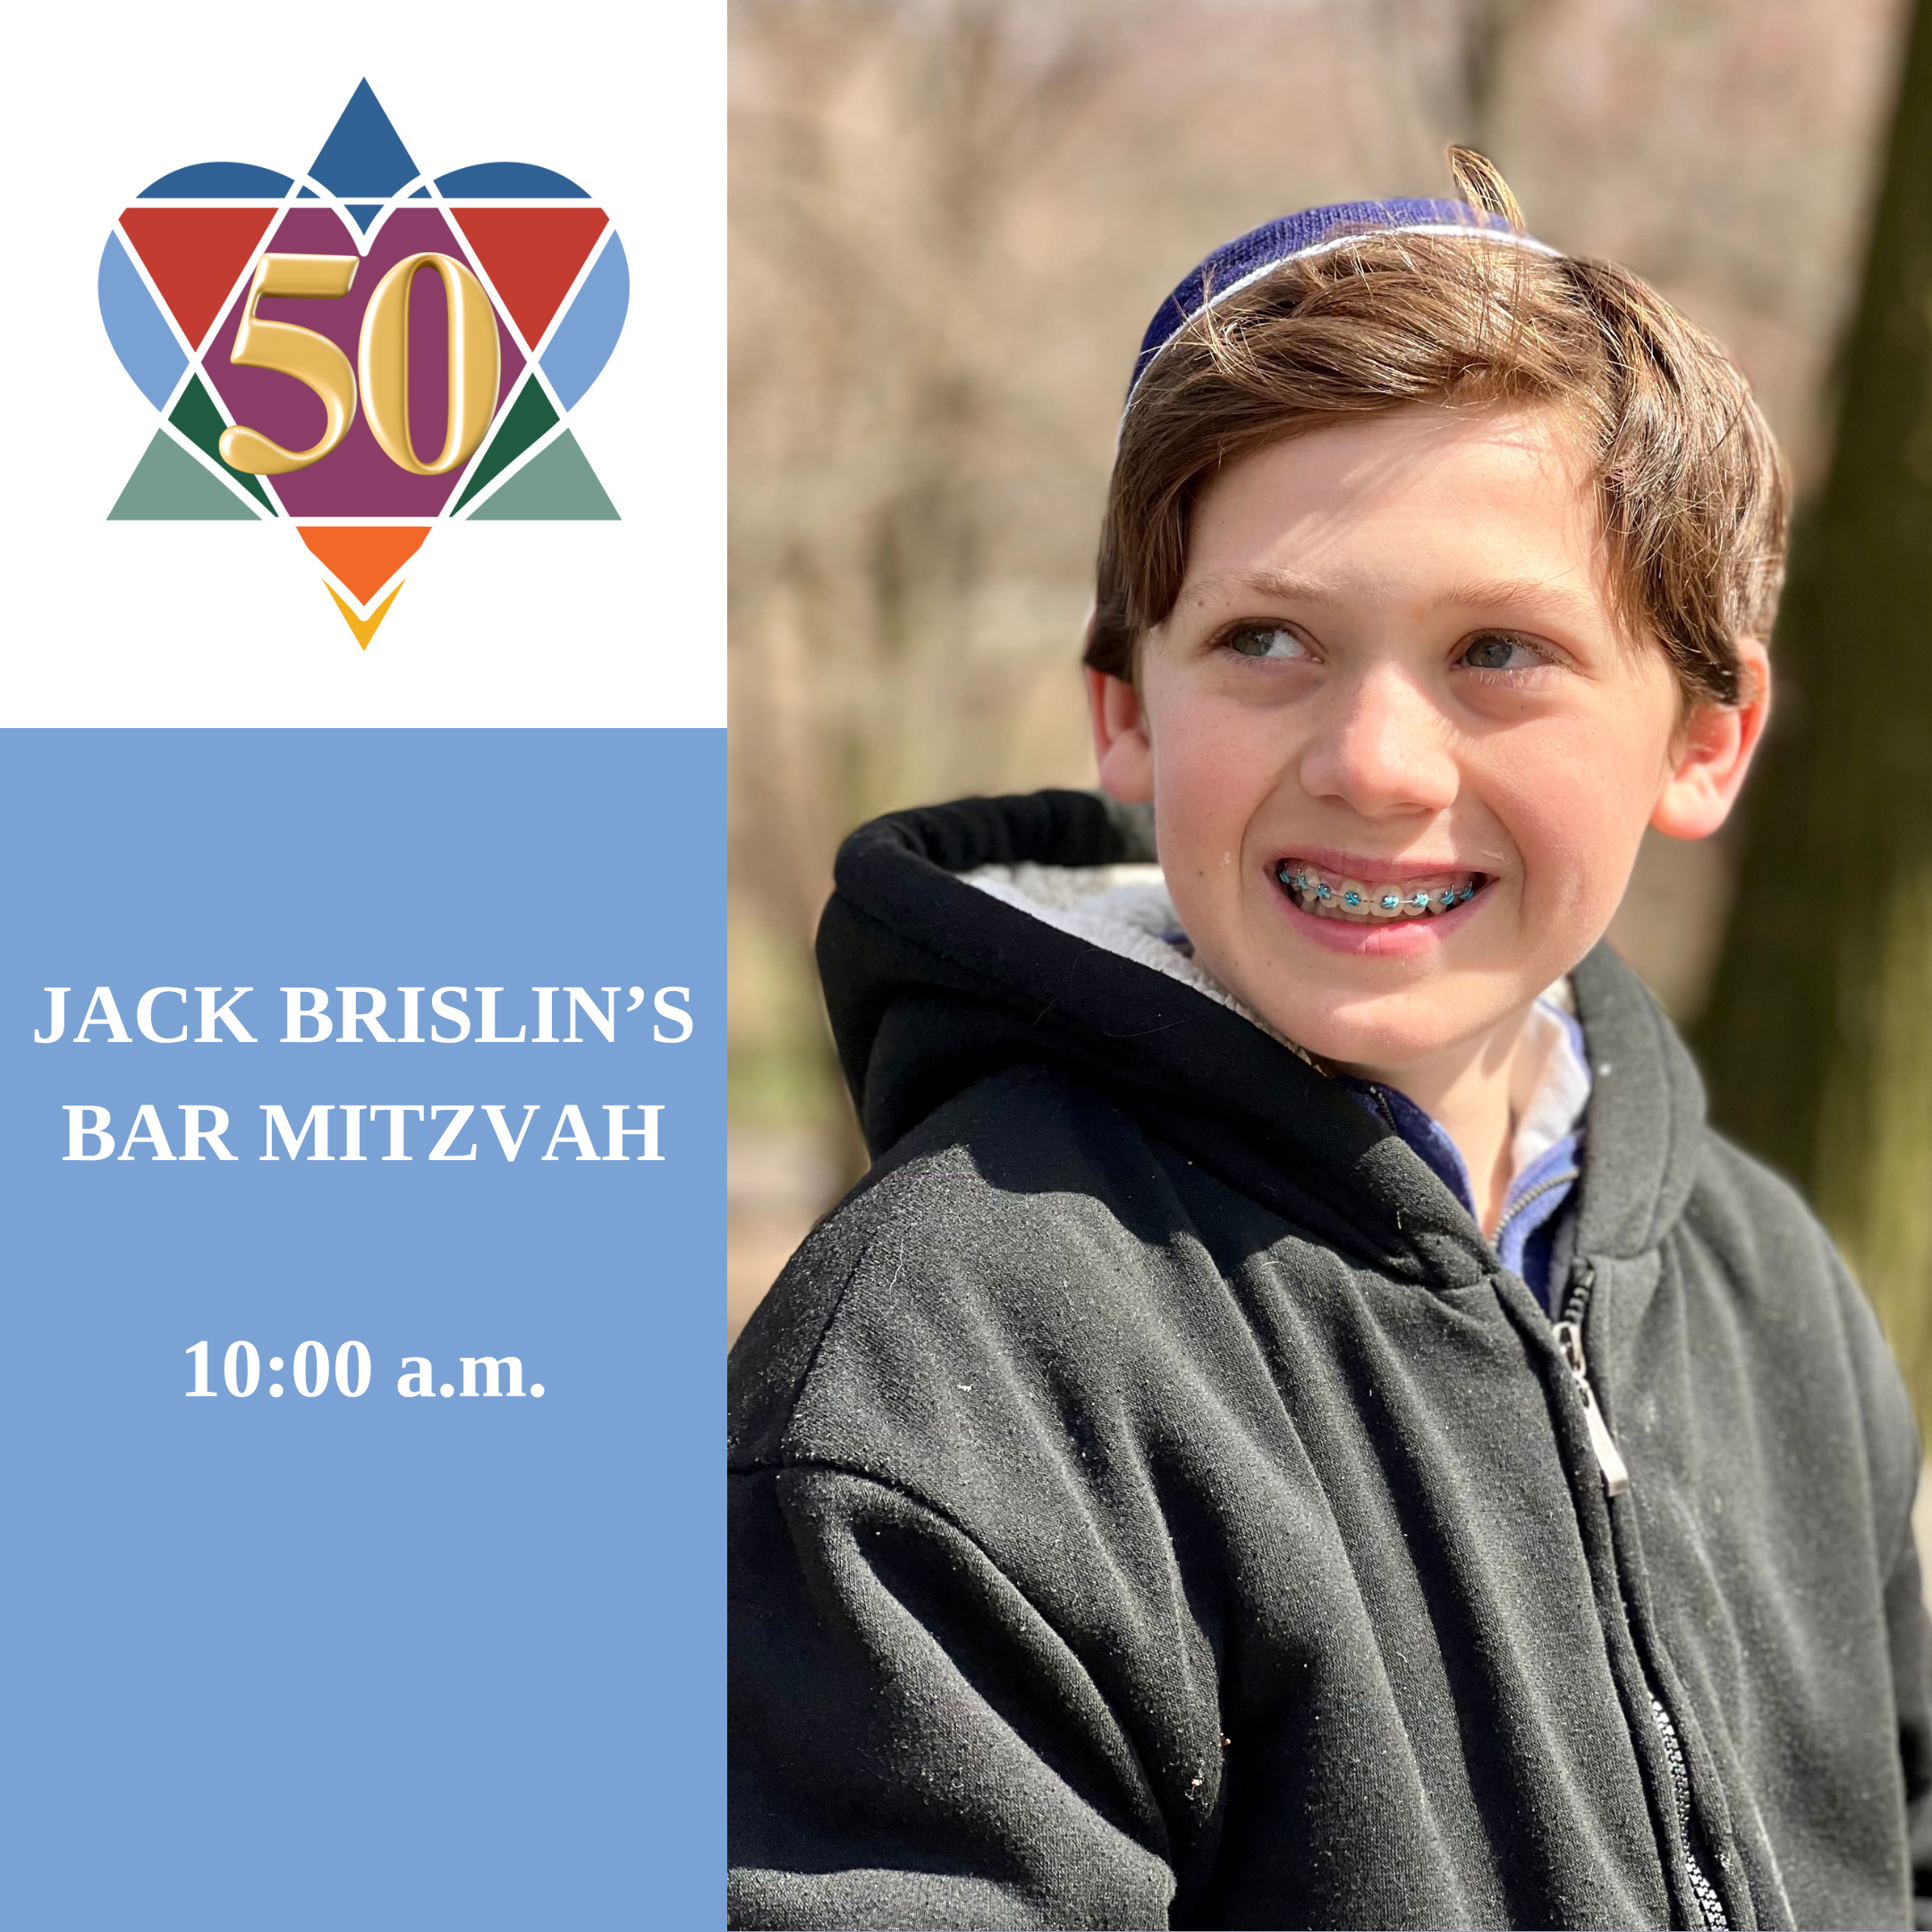 JACK BRISLIN'S BAR MITZVAH